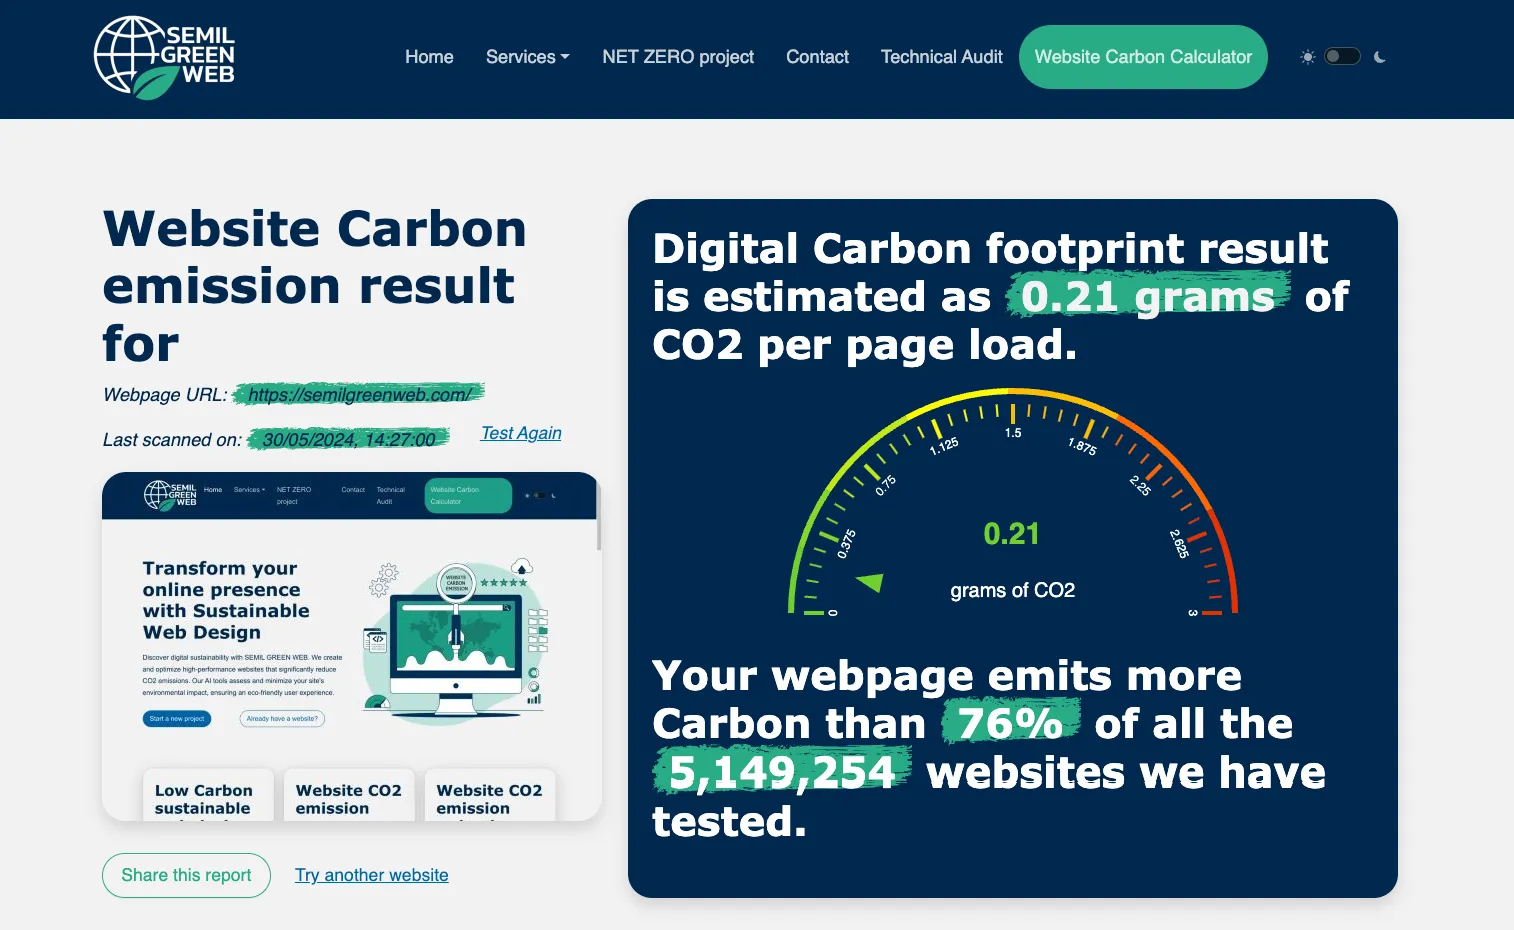 SEMIL GREEN WEB CO2 emission report